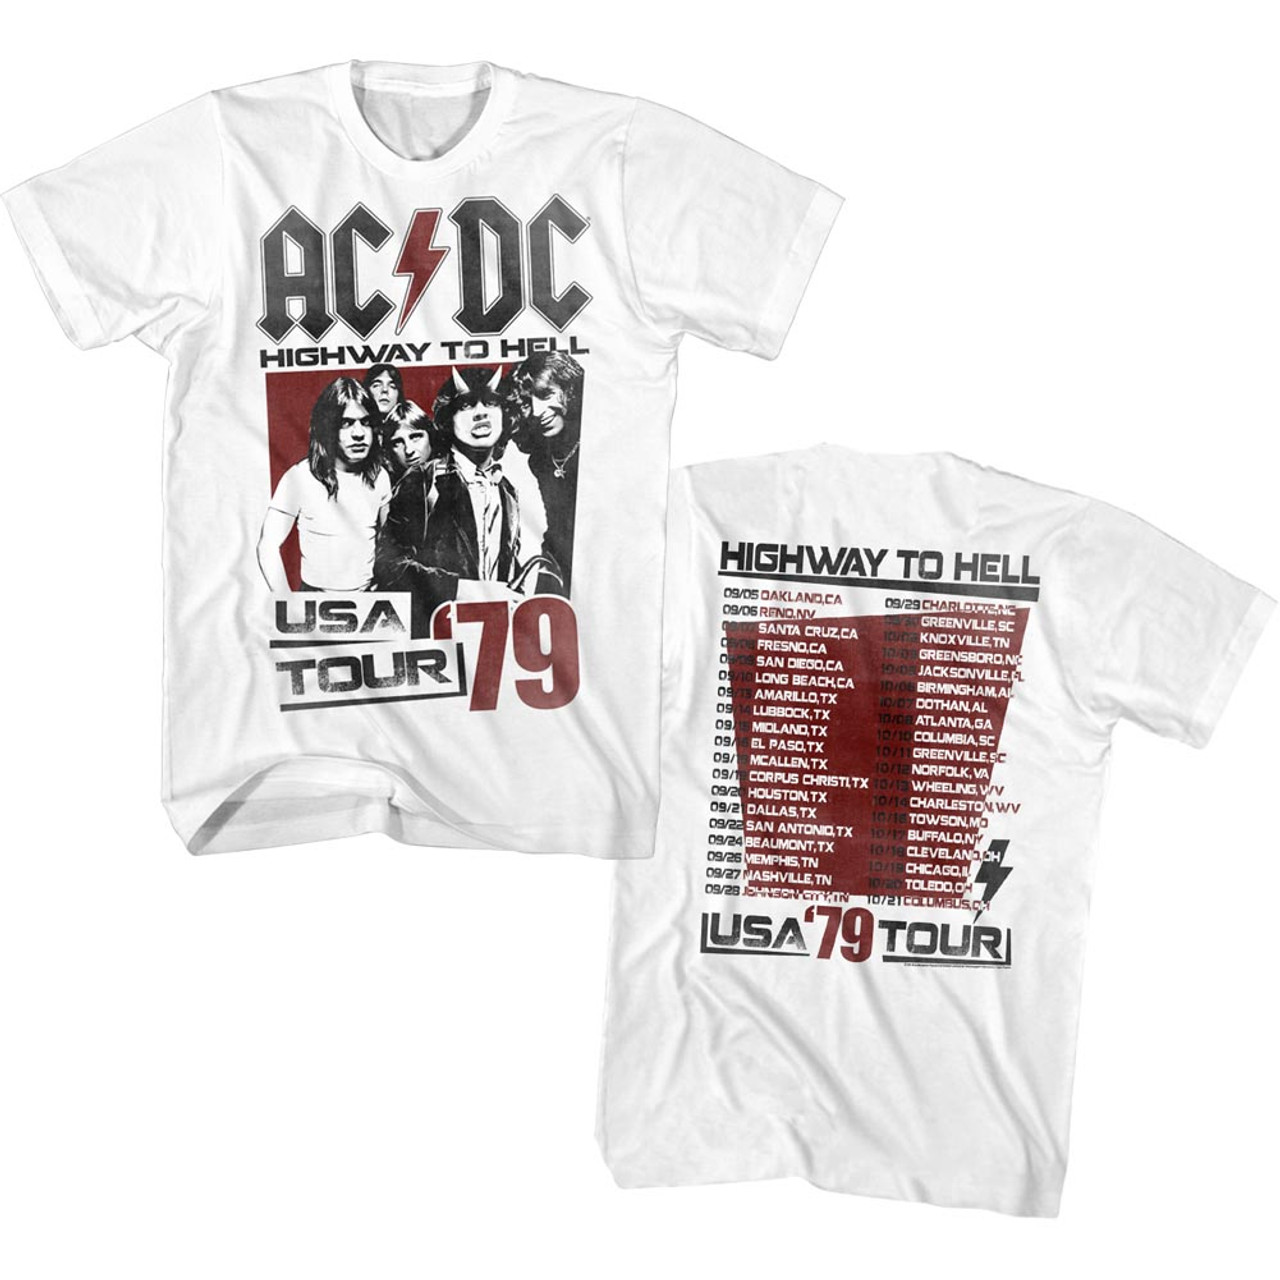 AC/DC F/B Highway To Hell USA Tourl USA Tour T-Shirt Vintage Classic Rock